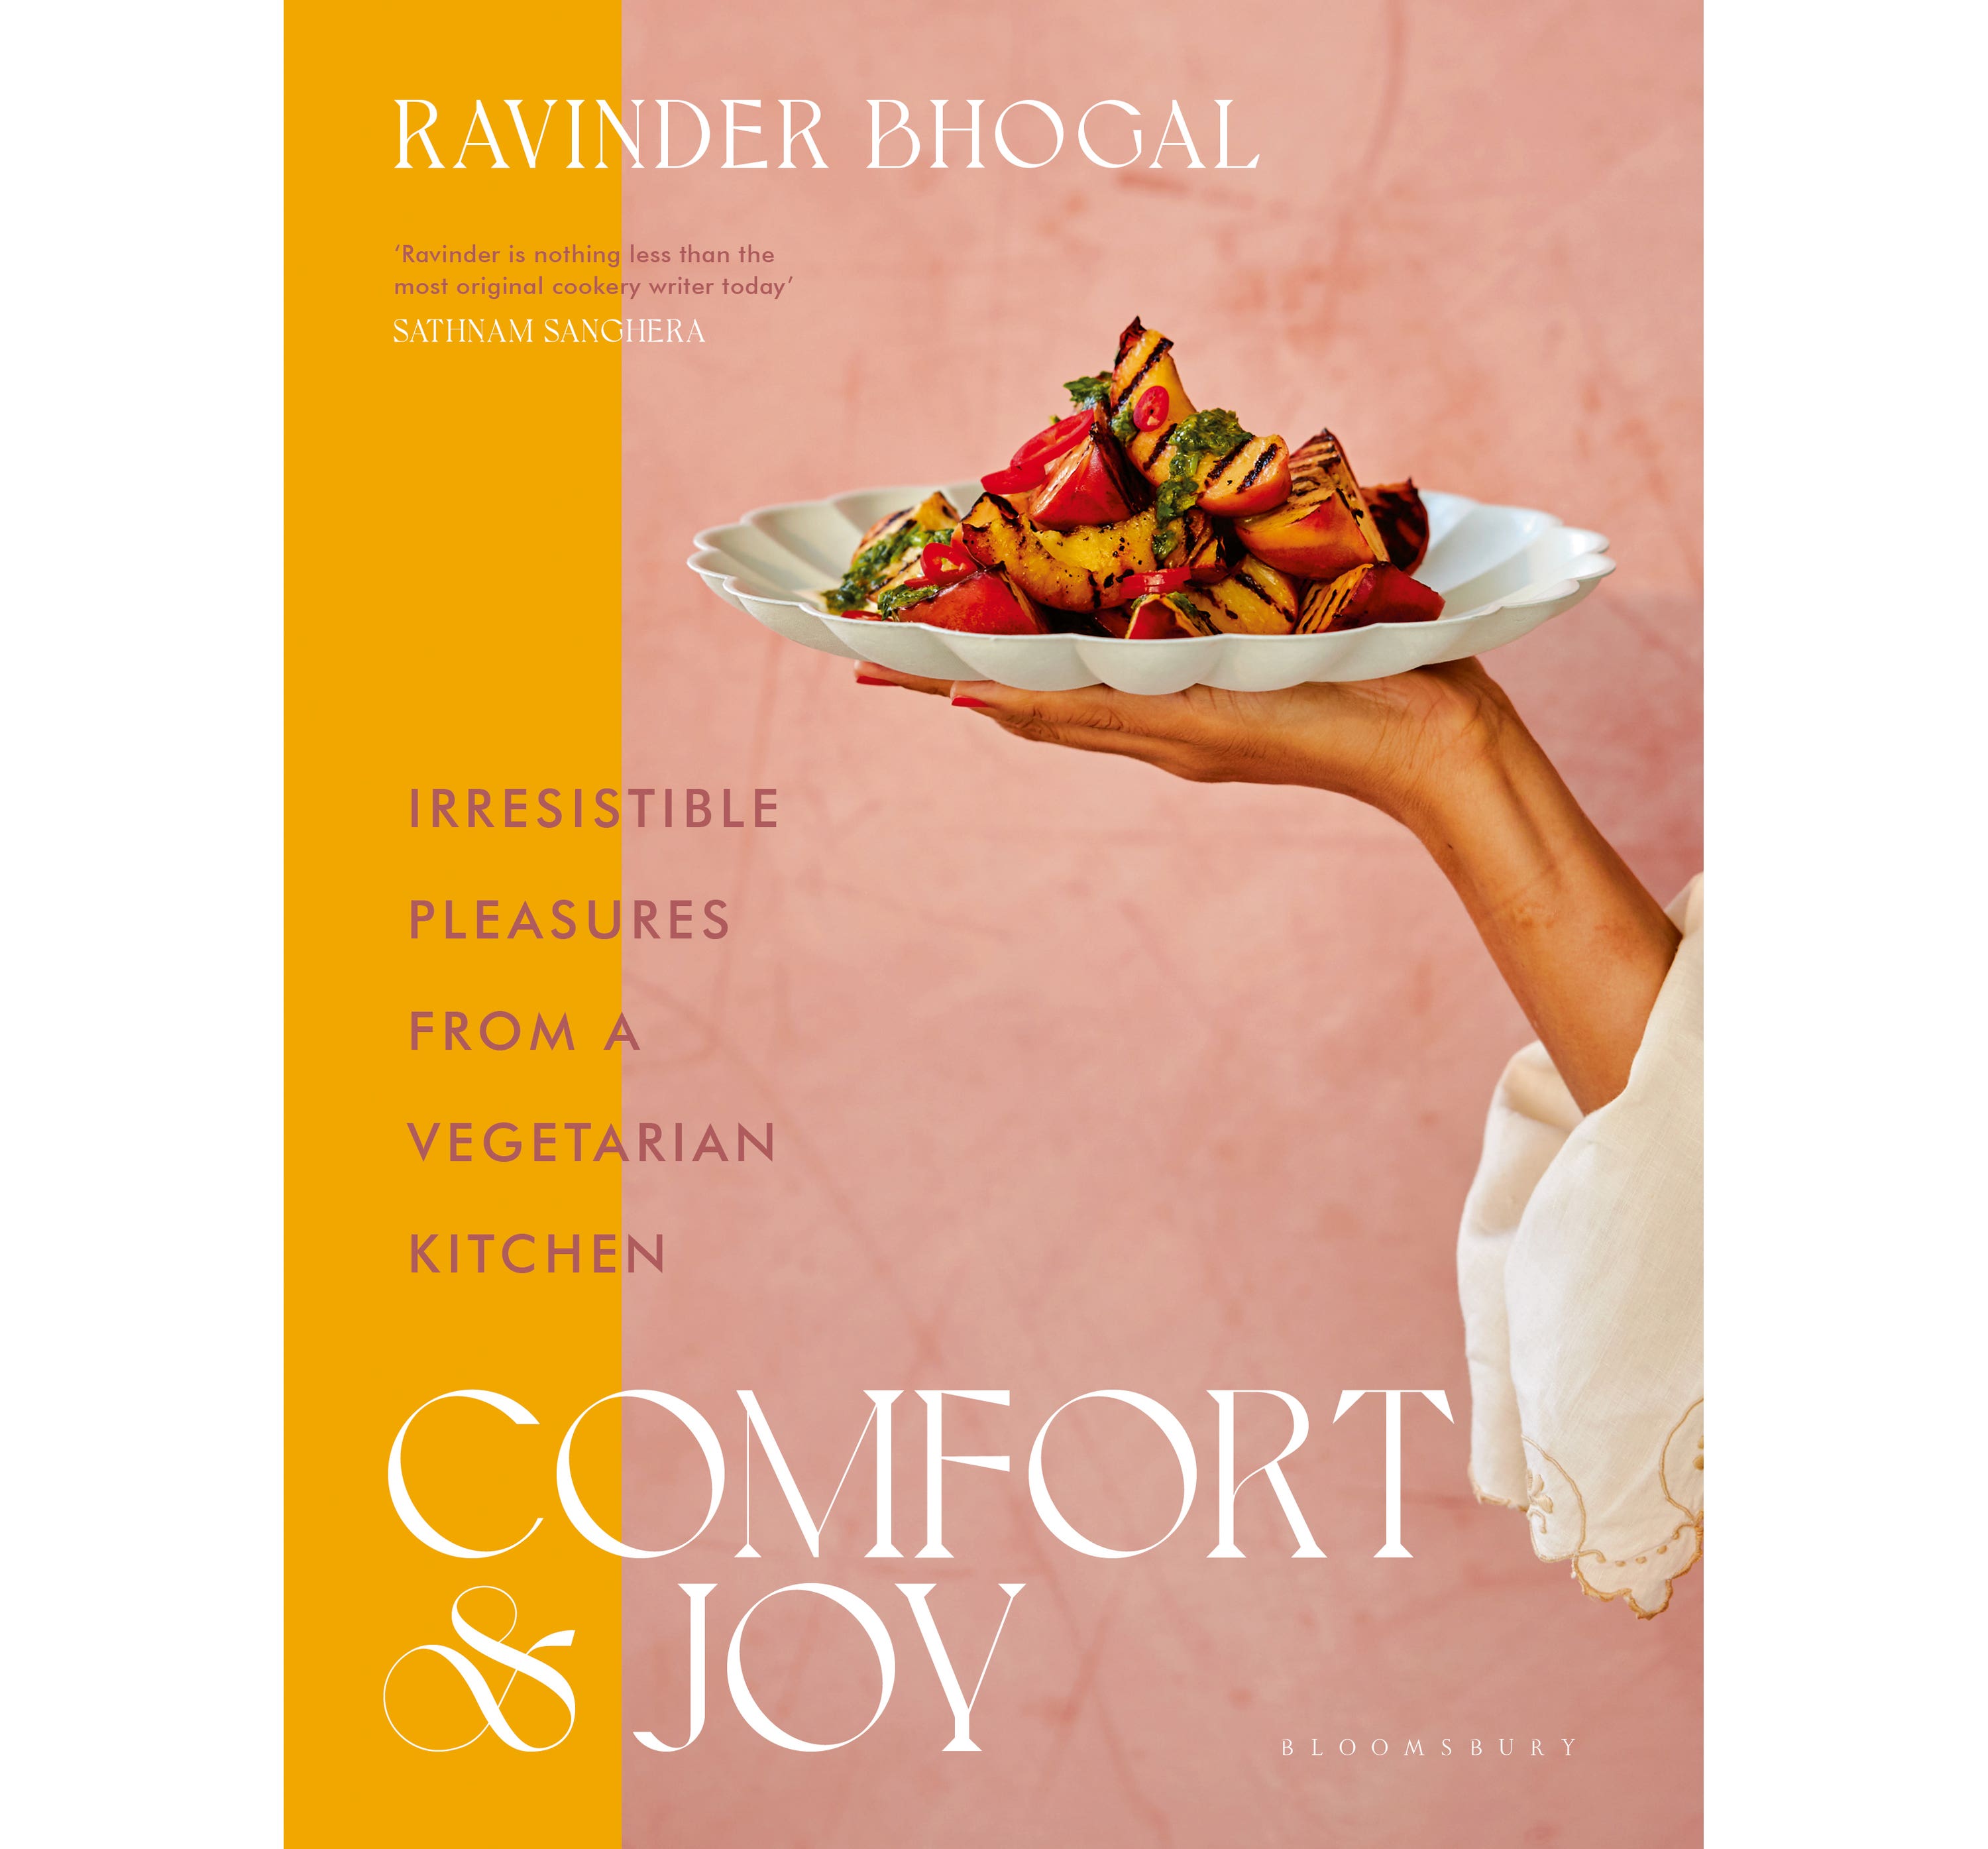 ‘Comfort & Joy’ is Bhogal’s third cookbook